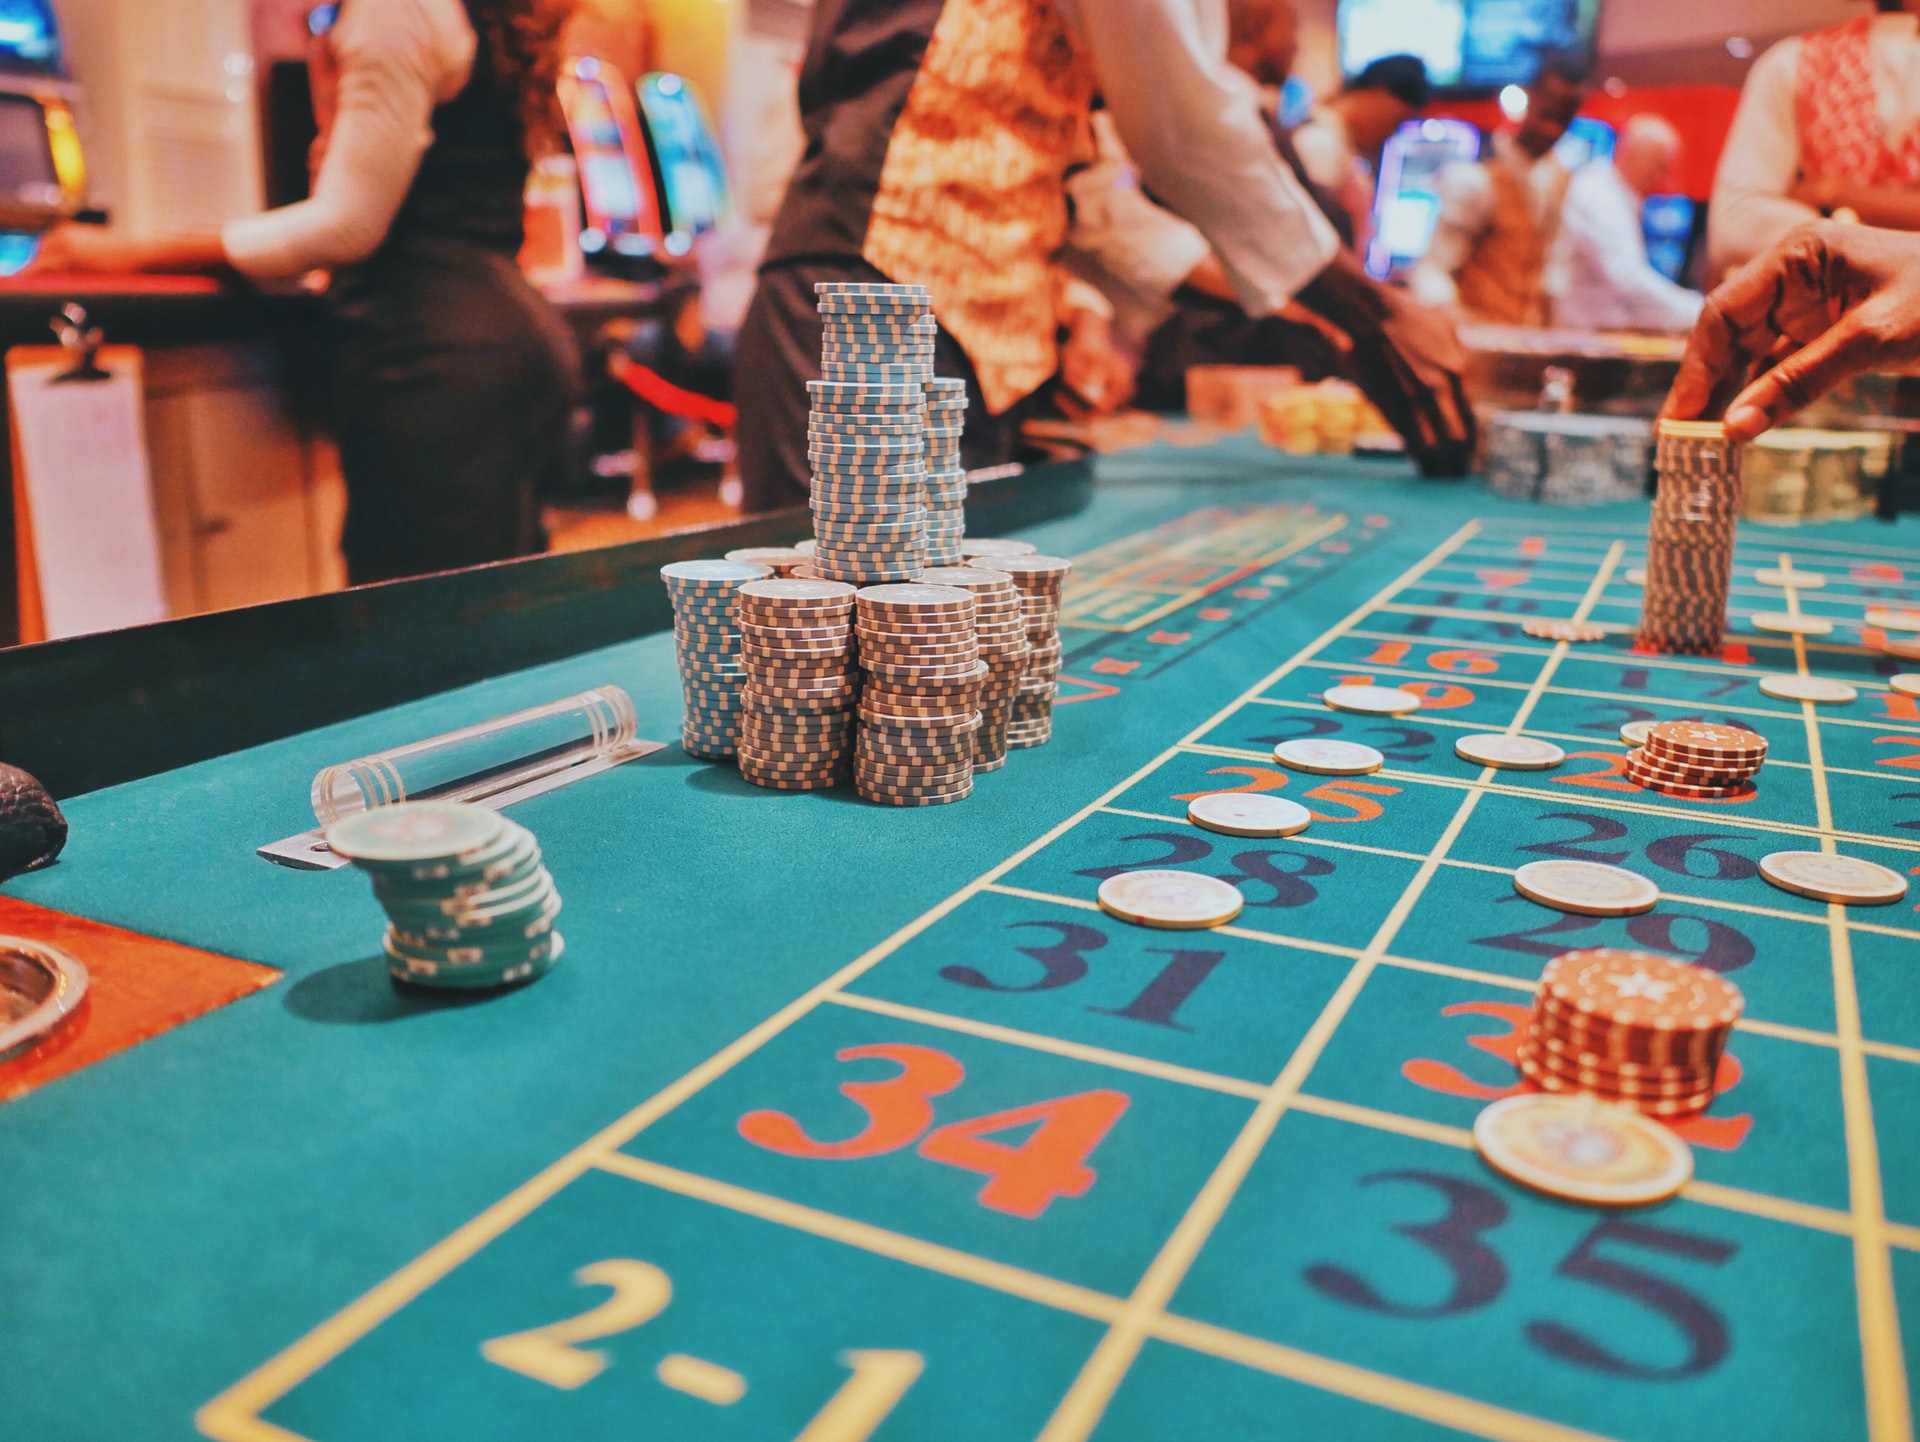 You are currently viewing Markedsværdien af online casinoer rammer 100 mia dollars i 2026